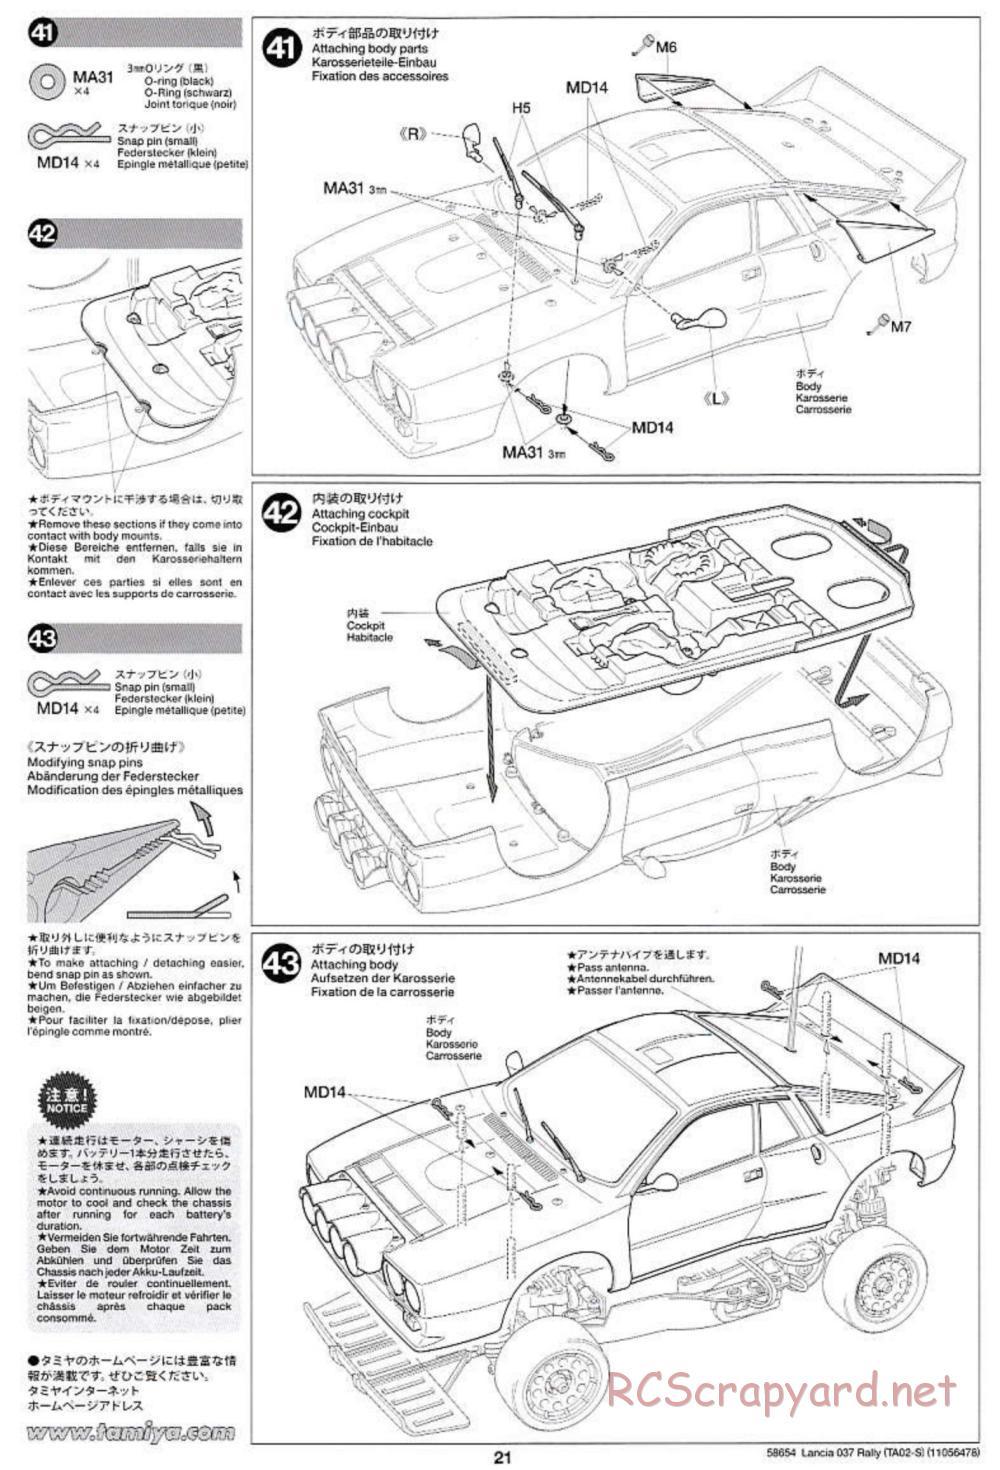 Tamiya - Lancia 037 Rally Chassis - Manual - Page 21